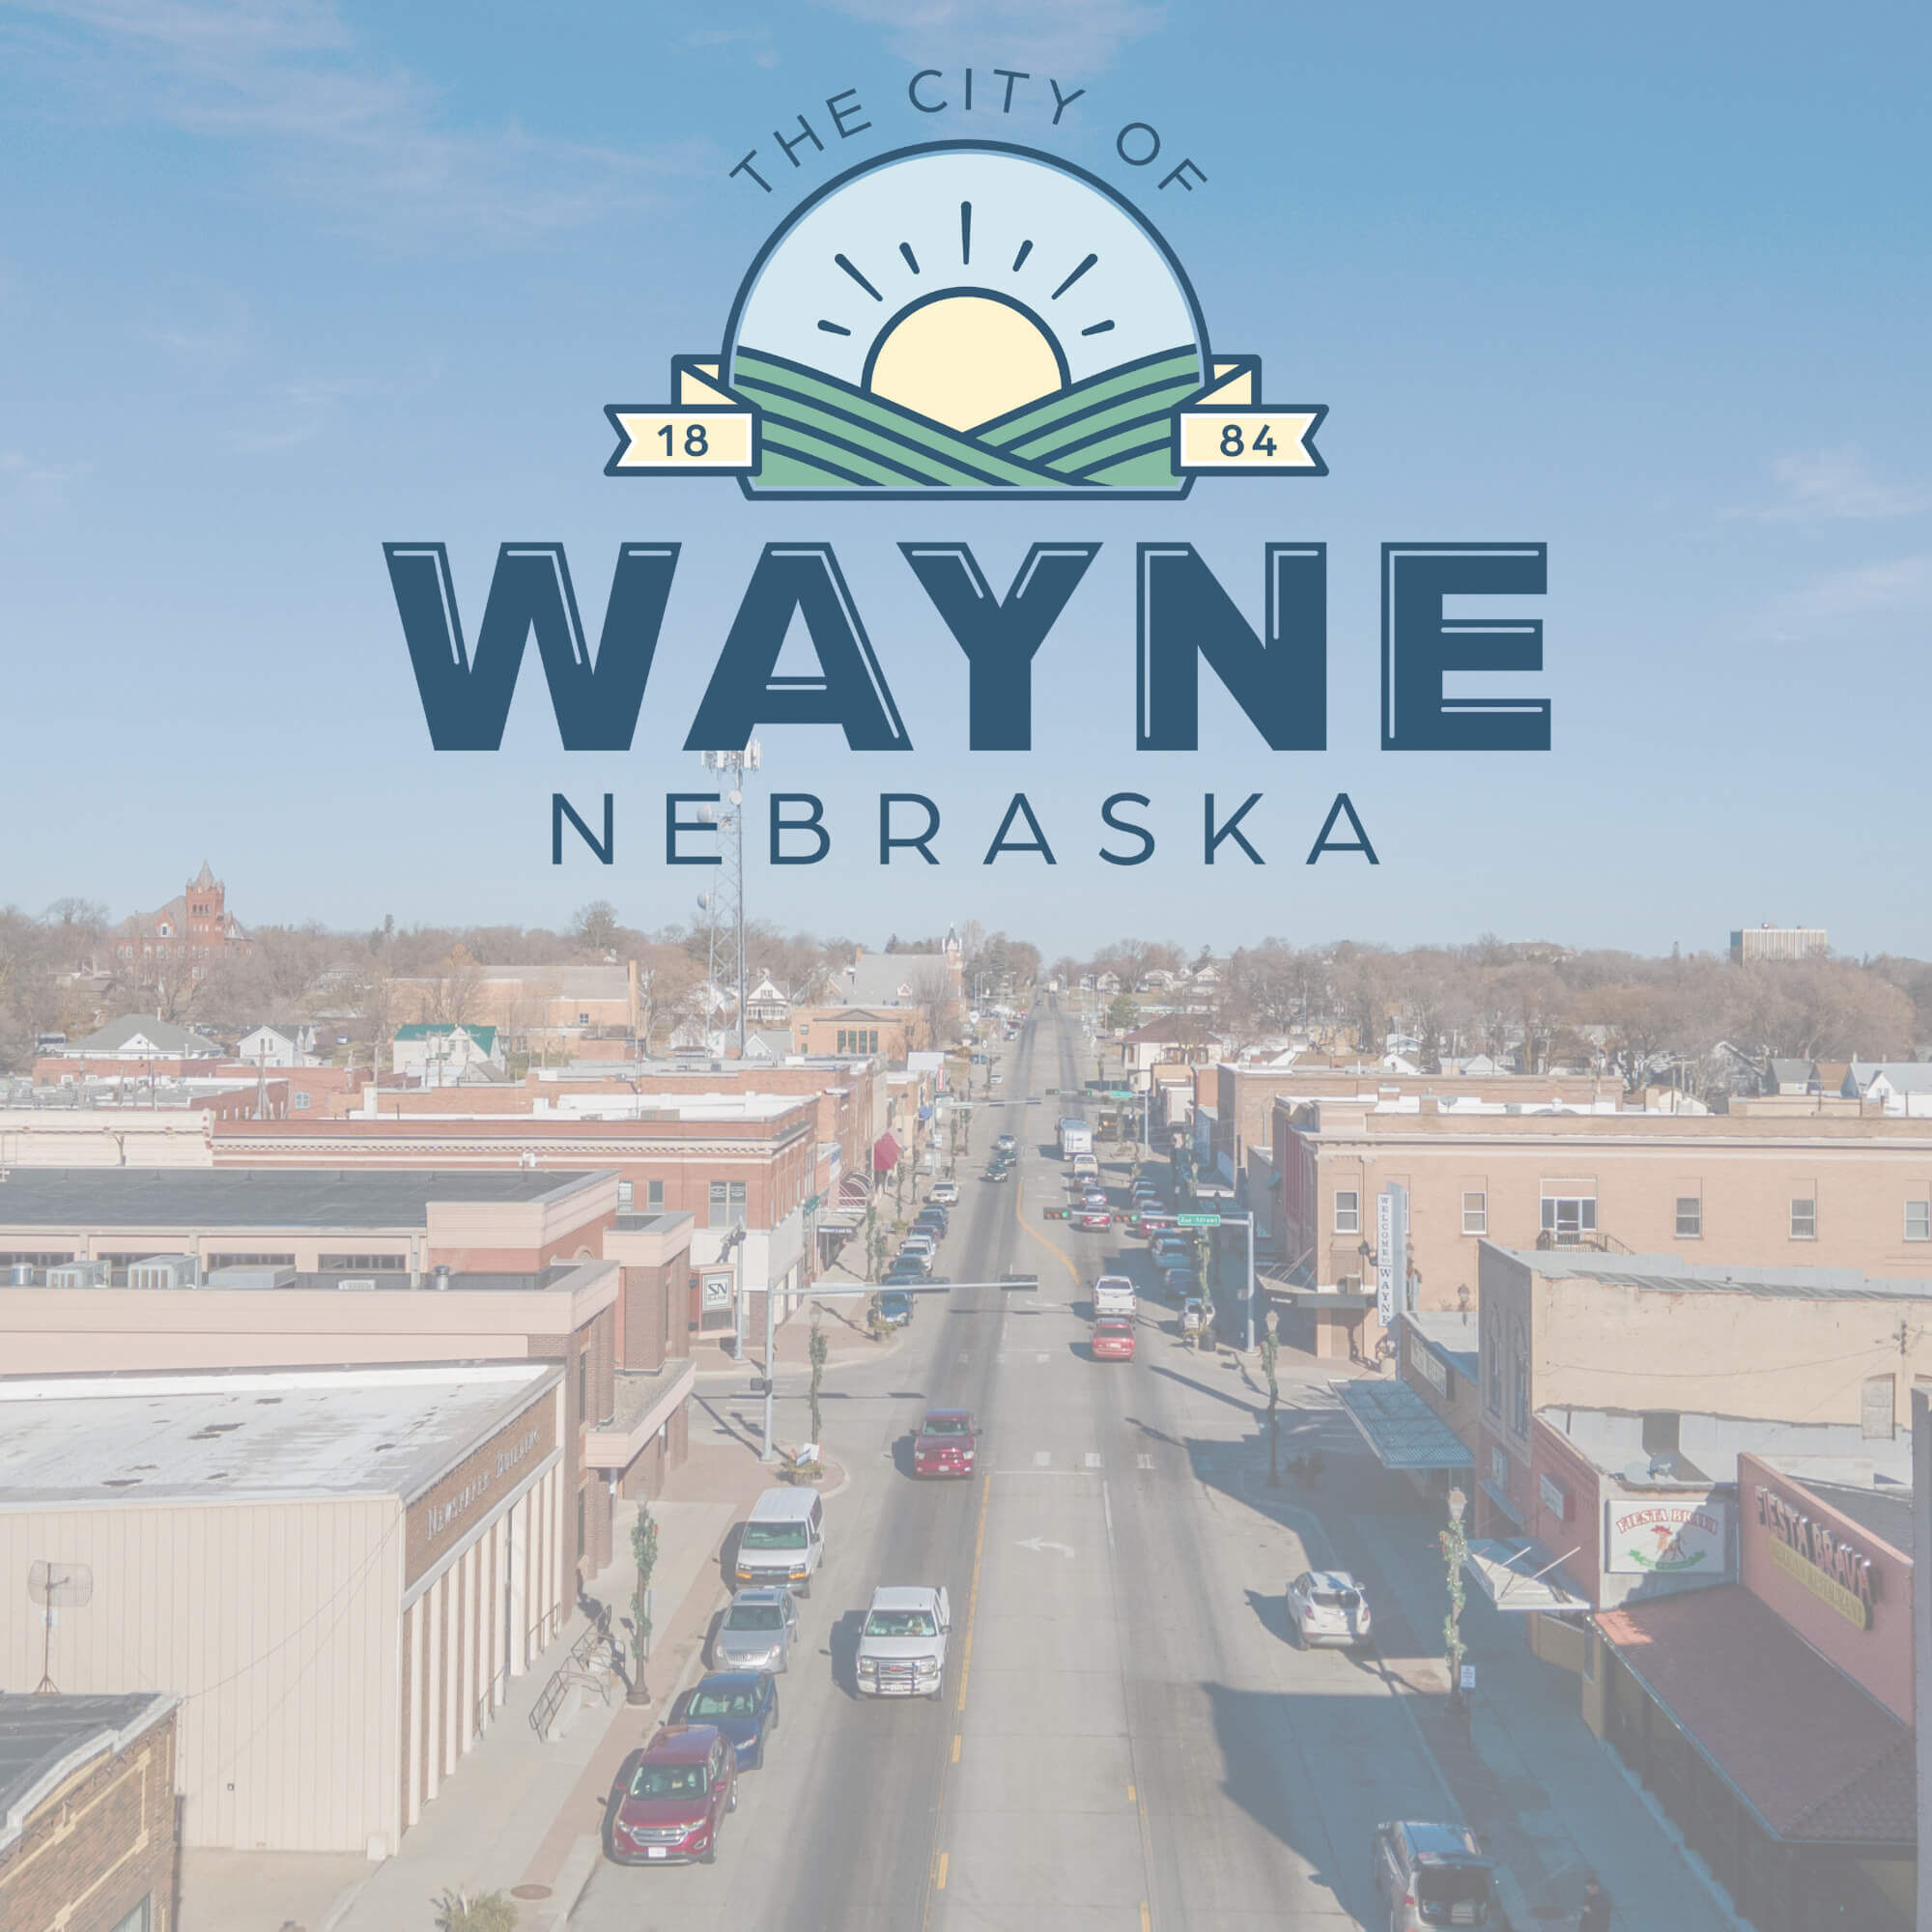 city of wayne nebraska